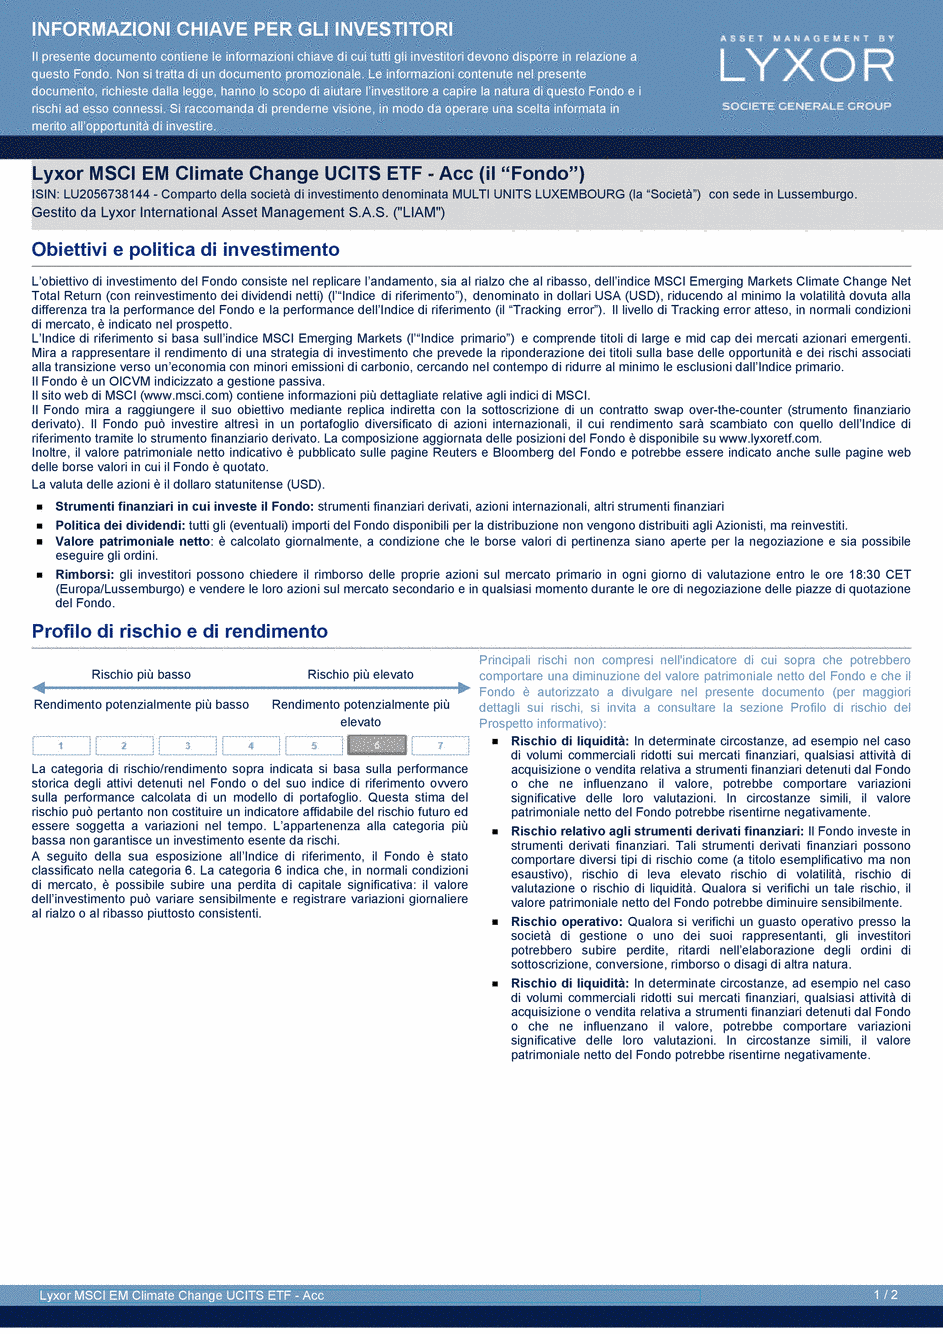 DICI Lyxor MSCI EM Climate Change UCITS ETF - Acc - 25/03/2020 - Italien